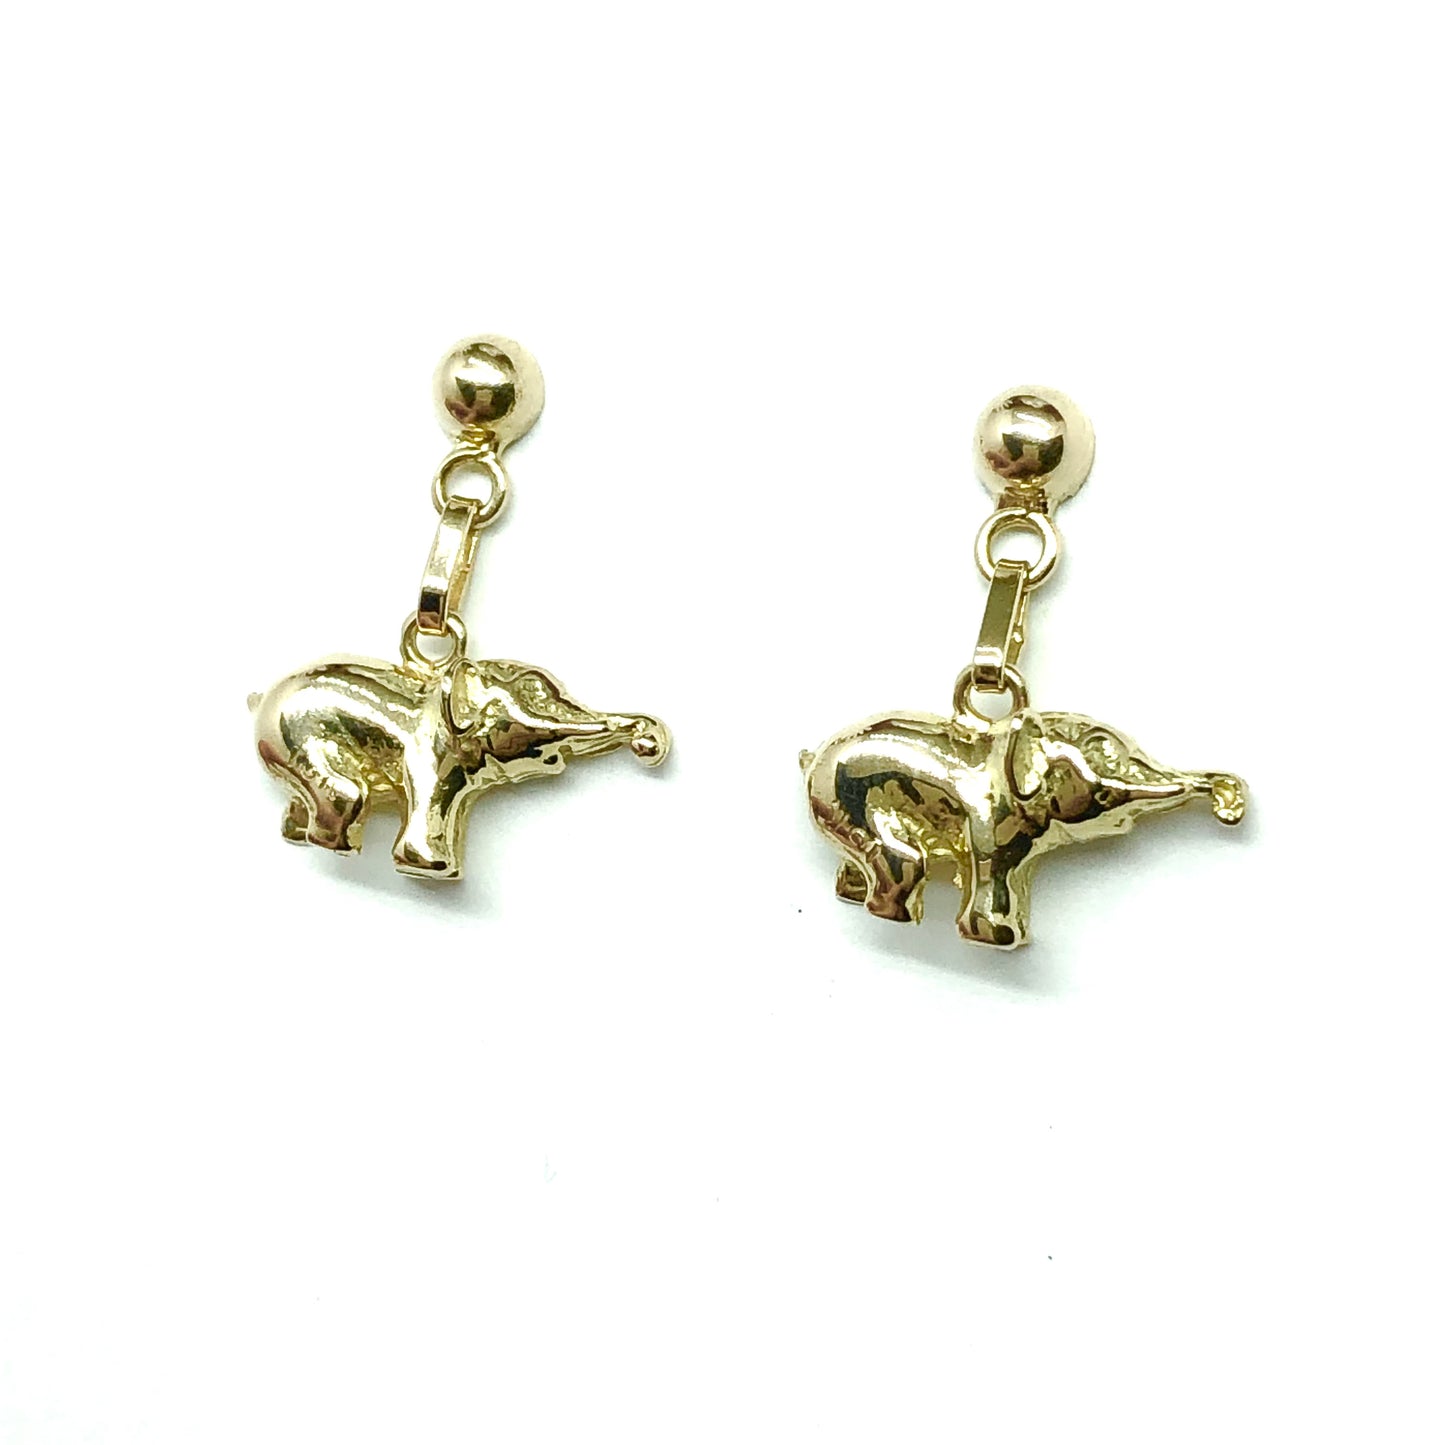 18k Gold Animal Charms Dangle Earrings for Women | Buy Discount Estate Jewelry Online at Blingschlingers.com